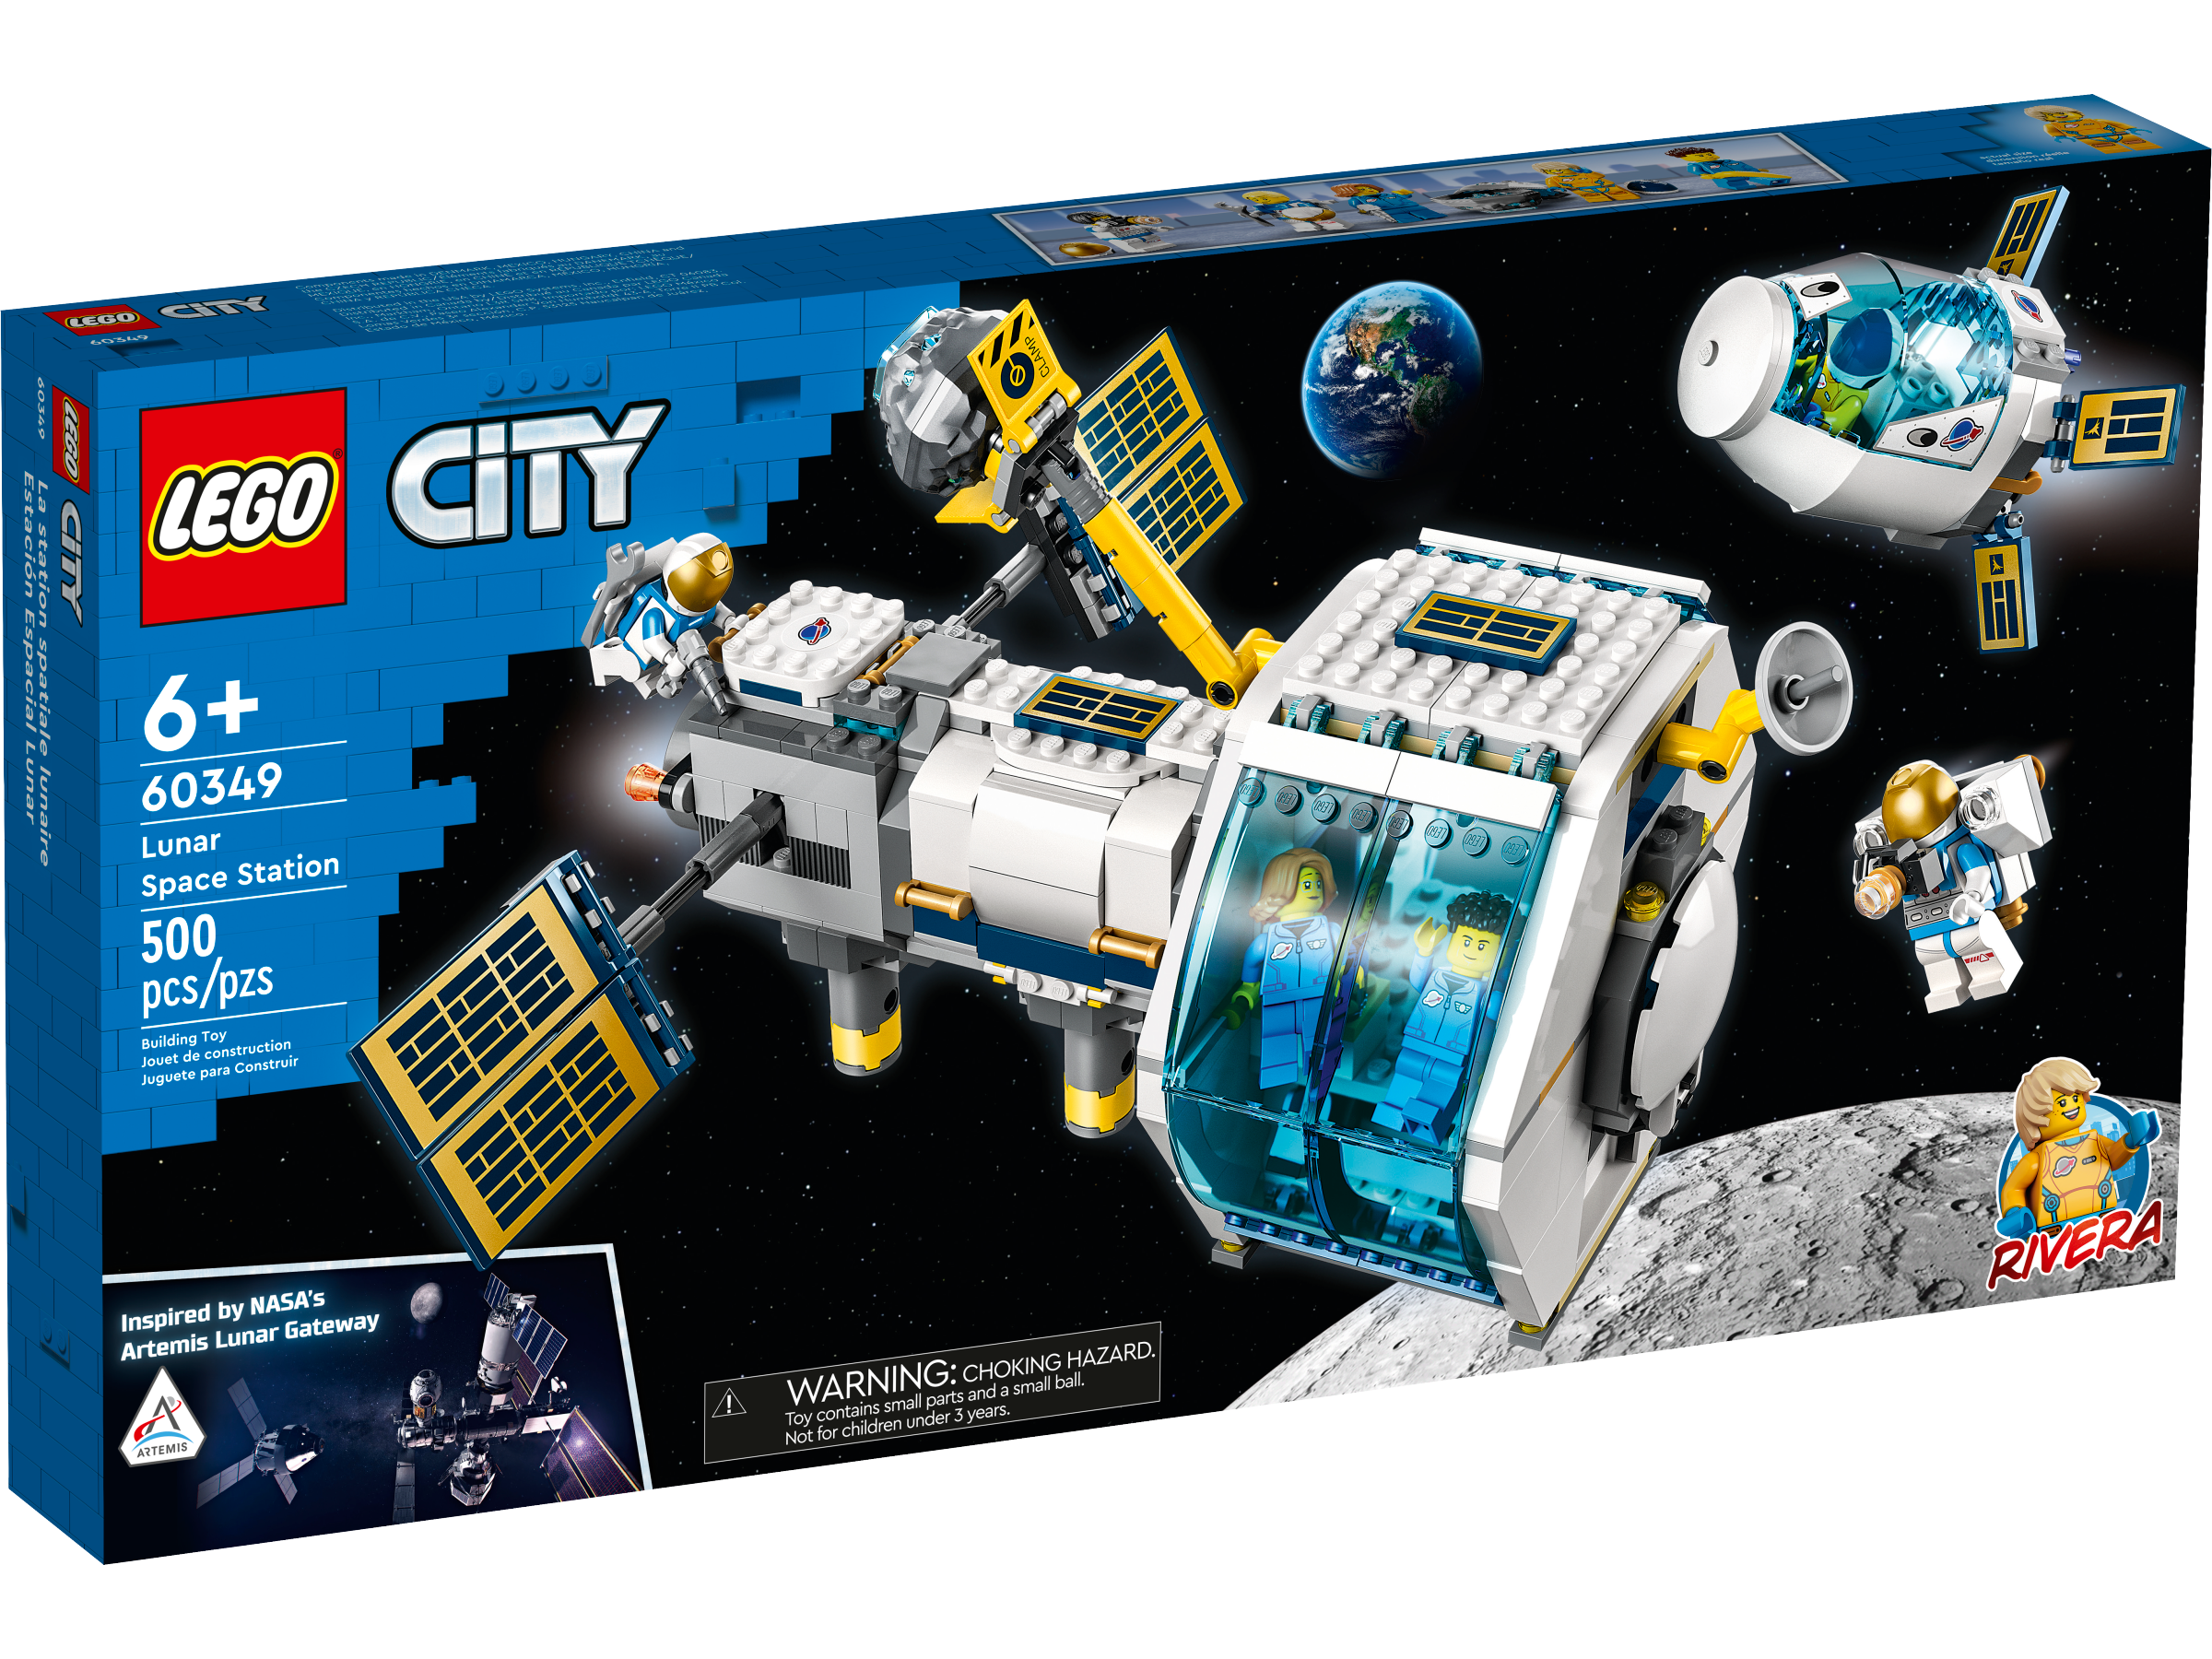 Lunar Space Station 60349, City